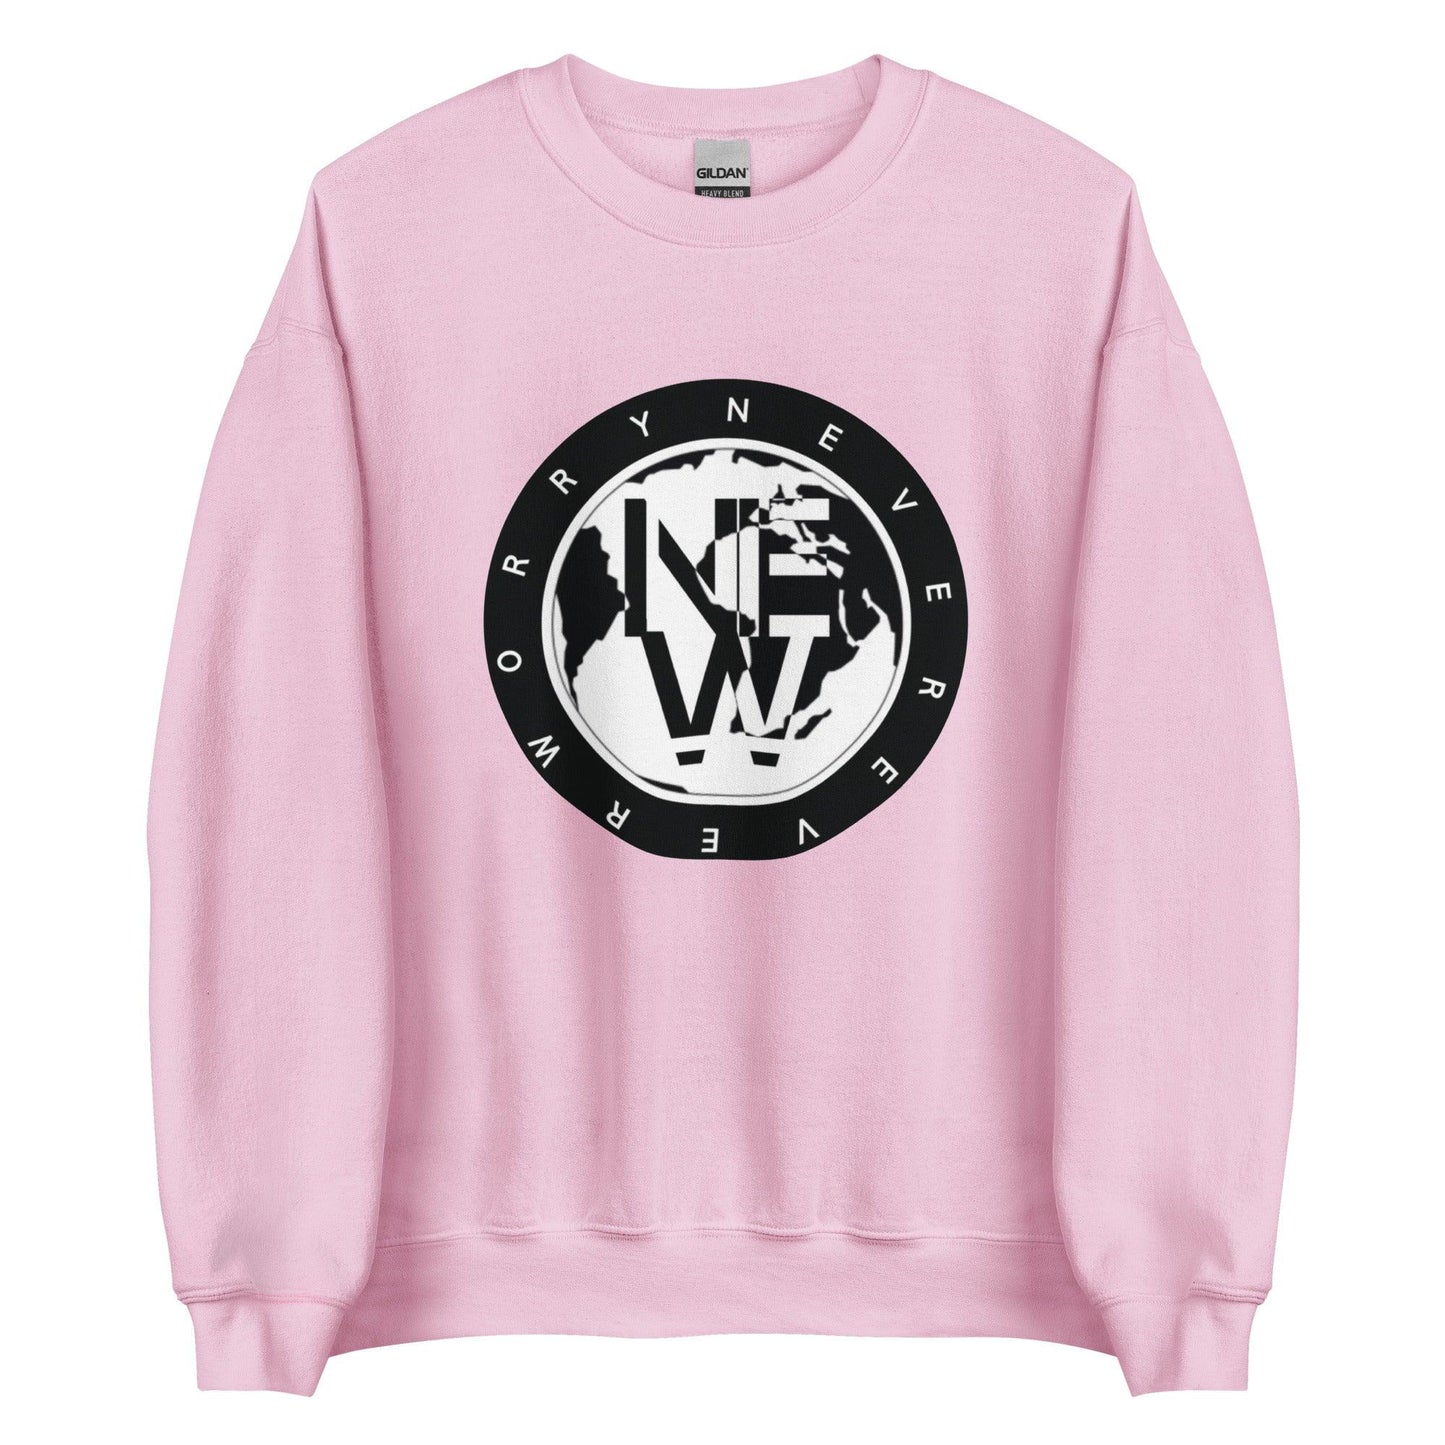 Jonathan Newsome "Never Worry" Sweatshirt - Fan Arch